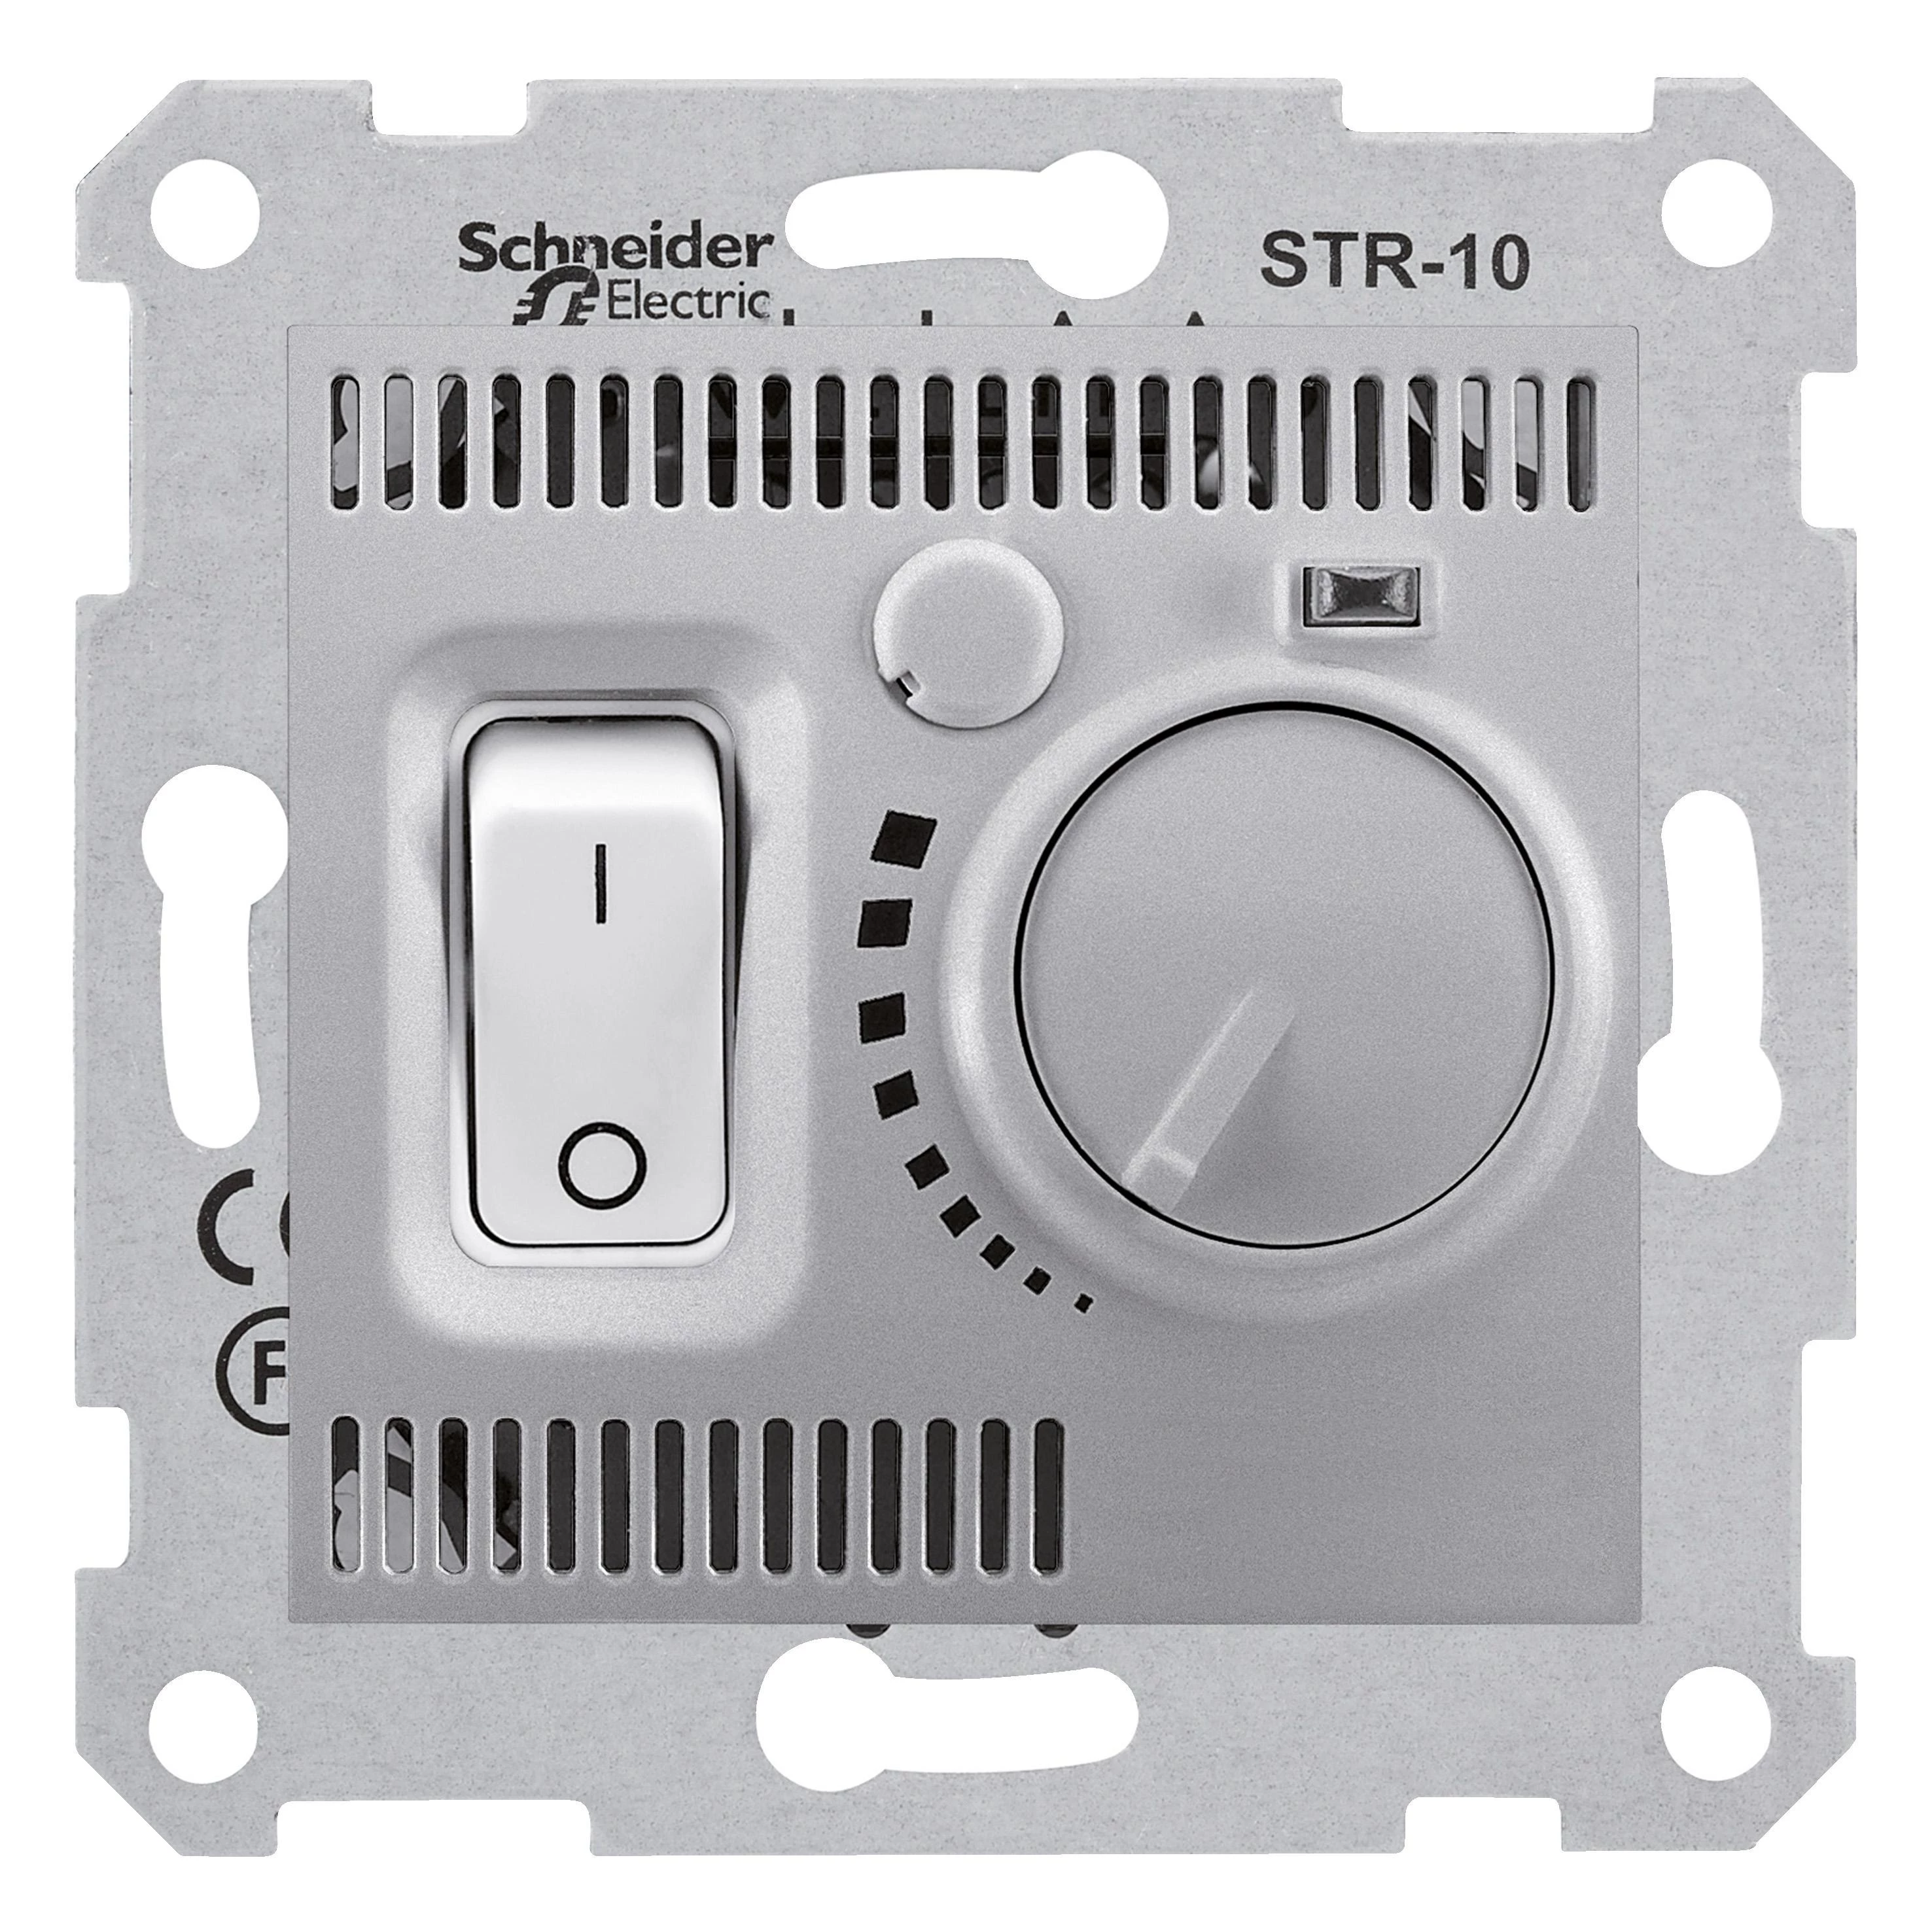  артикул SDN6000160 название Терморегулятор комнатный , Алюминий, серия Sedna, Schneider Electric